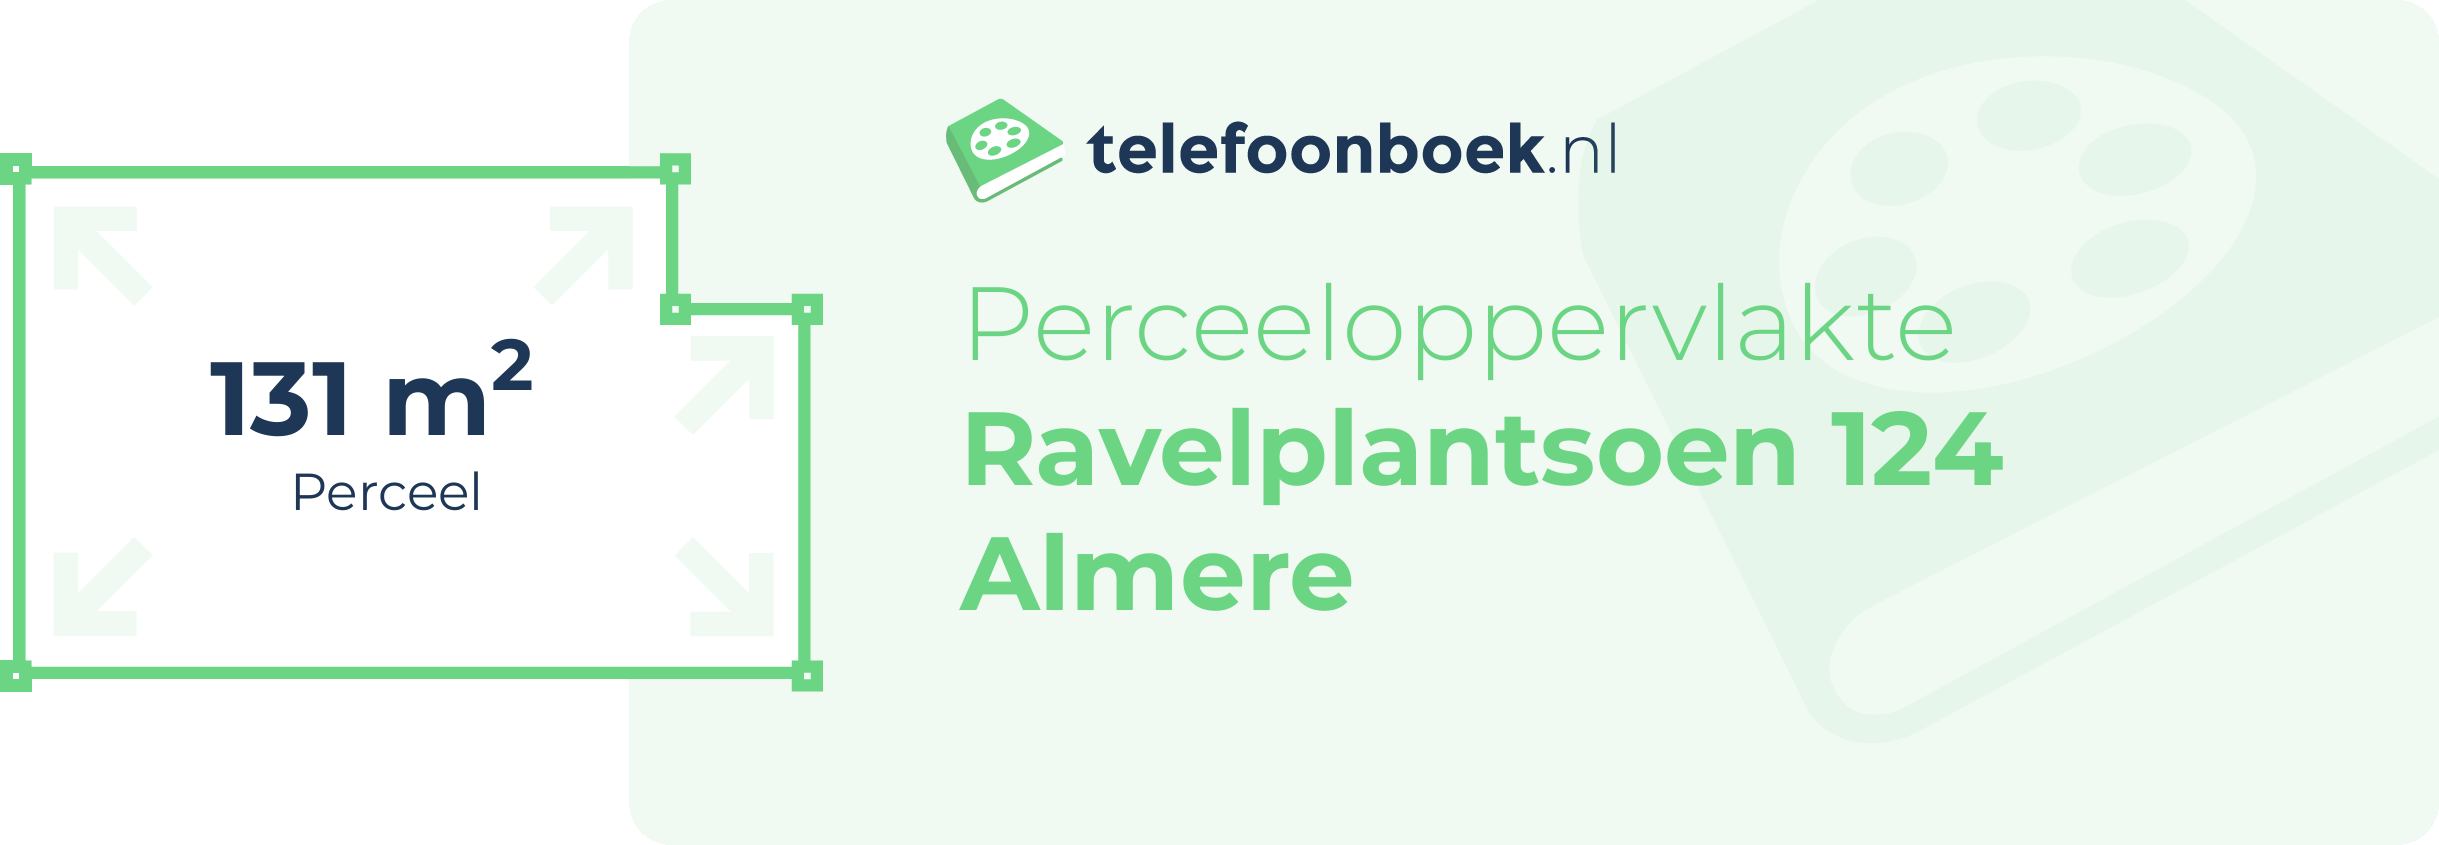 Perceeloppervlakte Ravelplantsoen 124 Almere